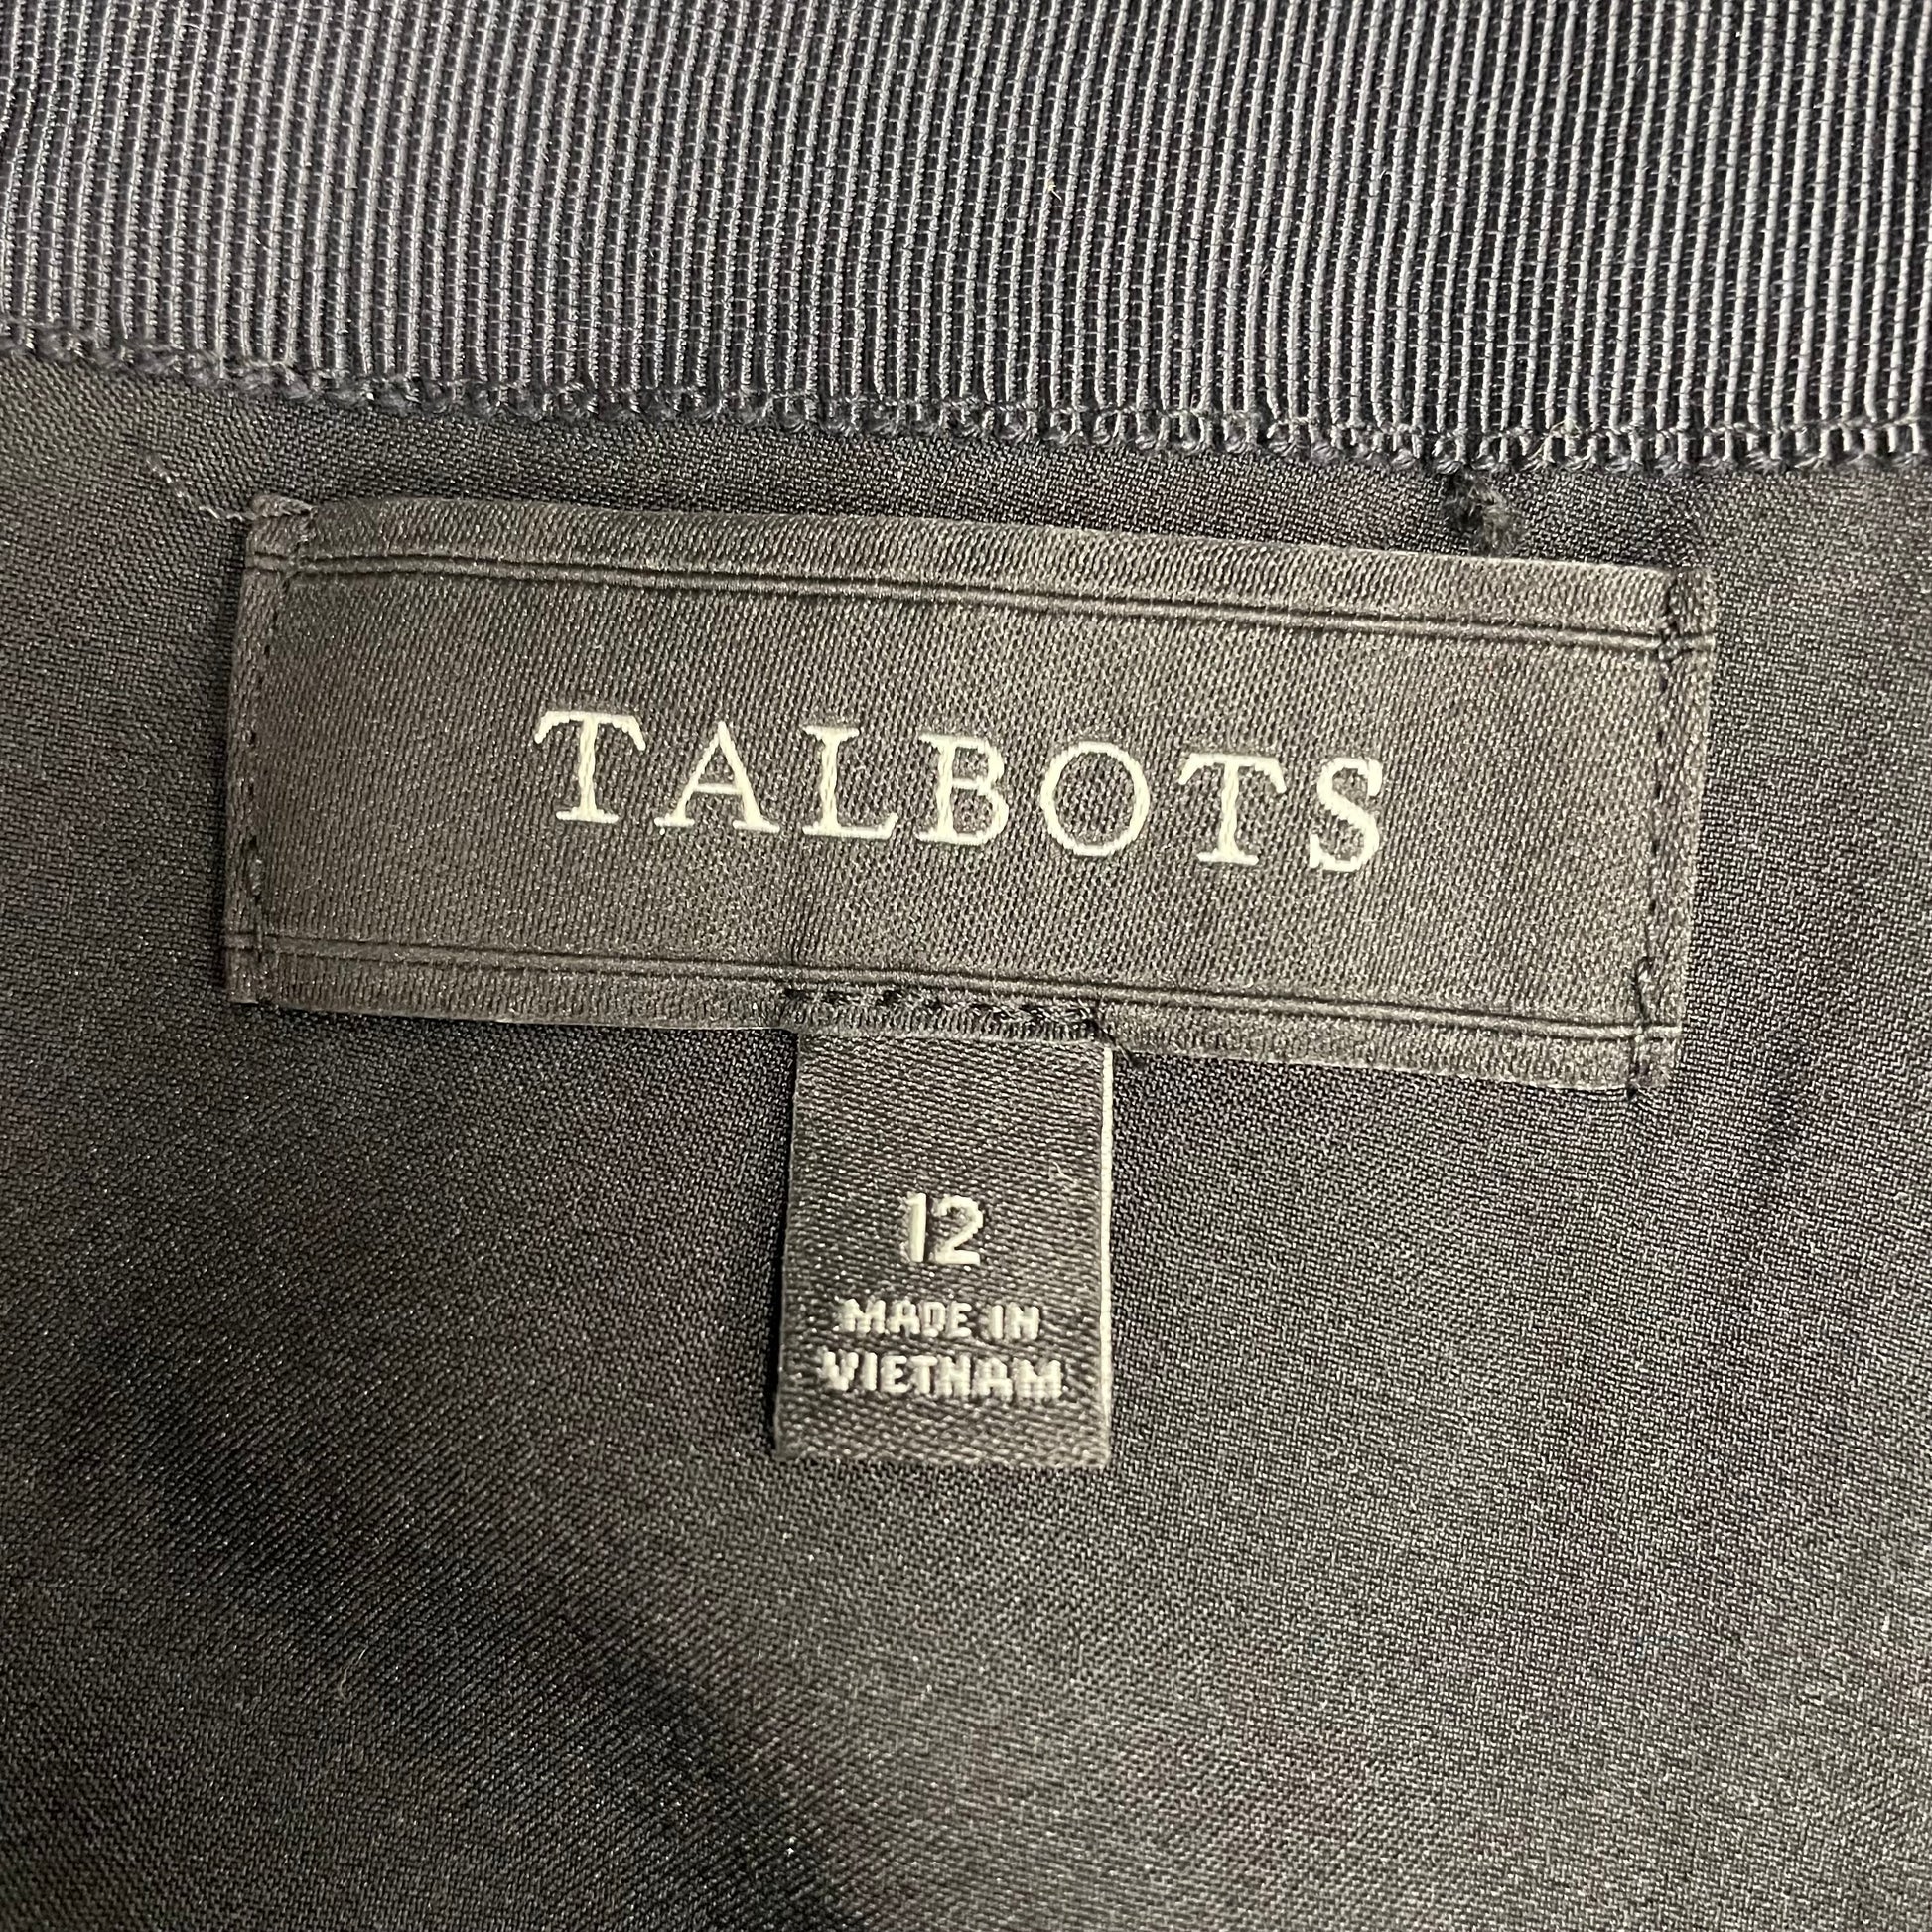 Pants Work/dress By Talbots O Size: 12